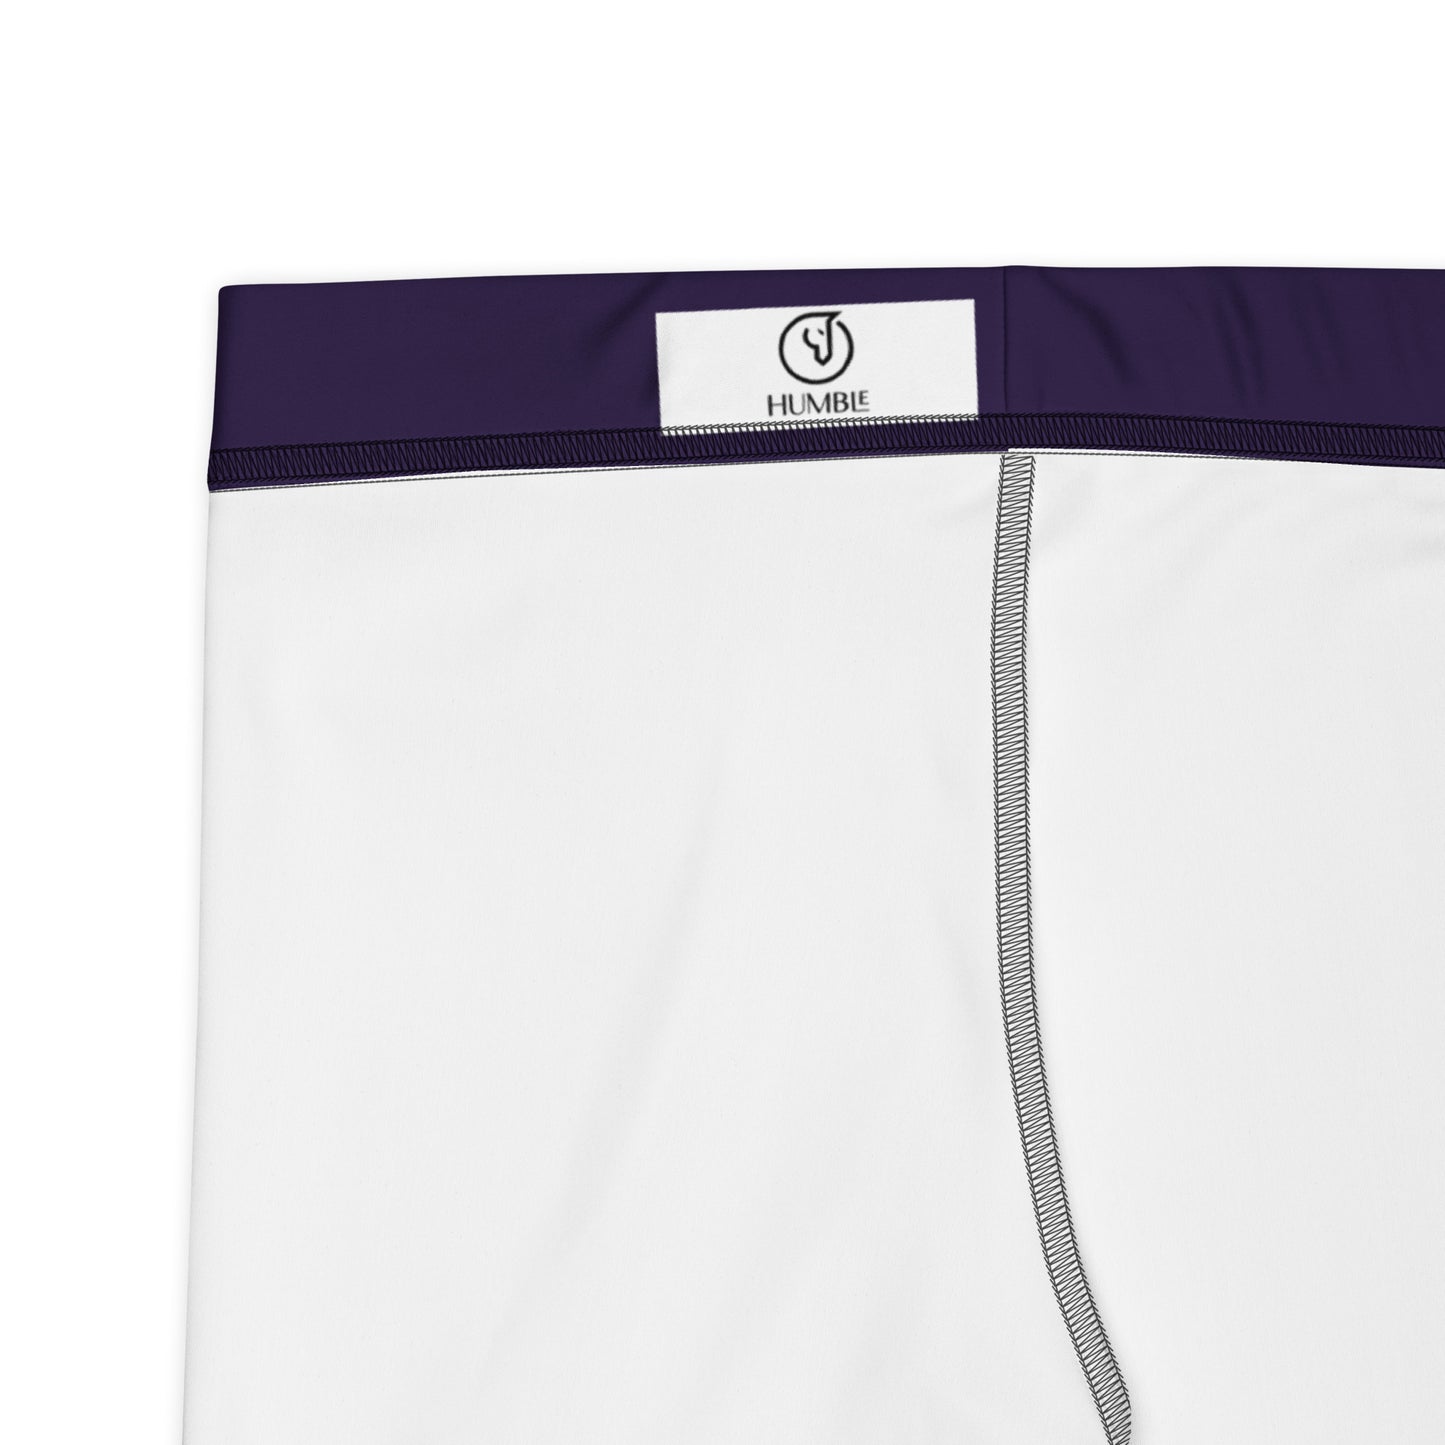 Humble sportswear, women's Color Match deep purple stretchy activewear bike shorts 